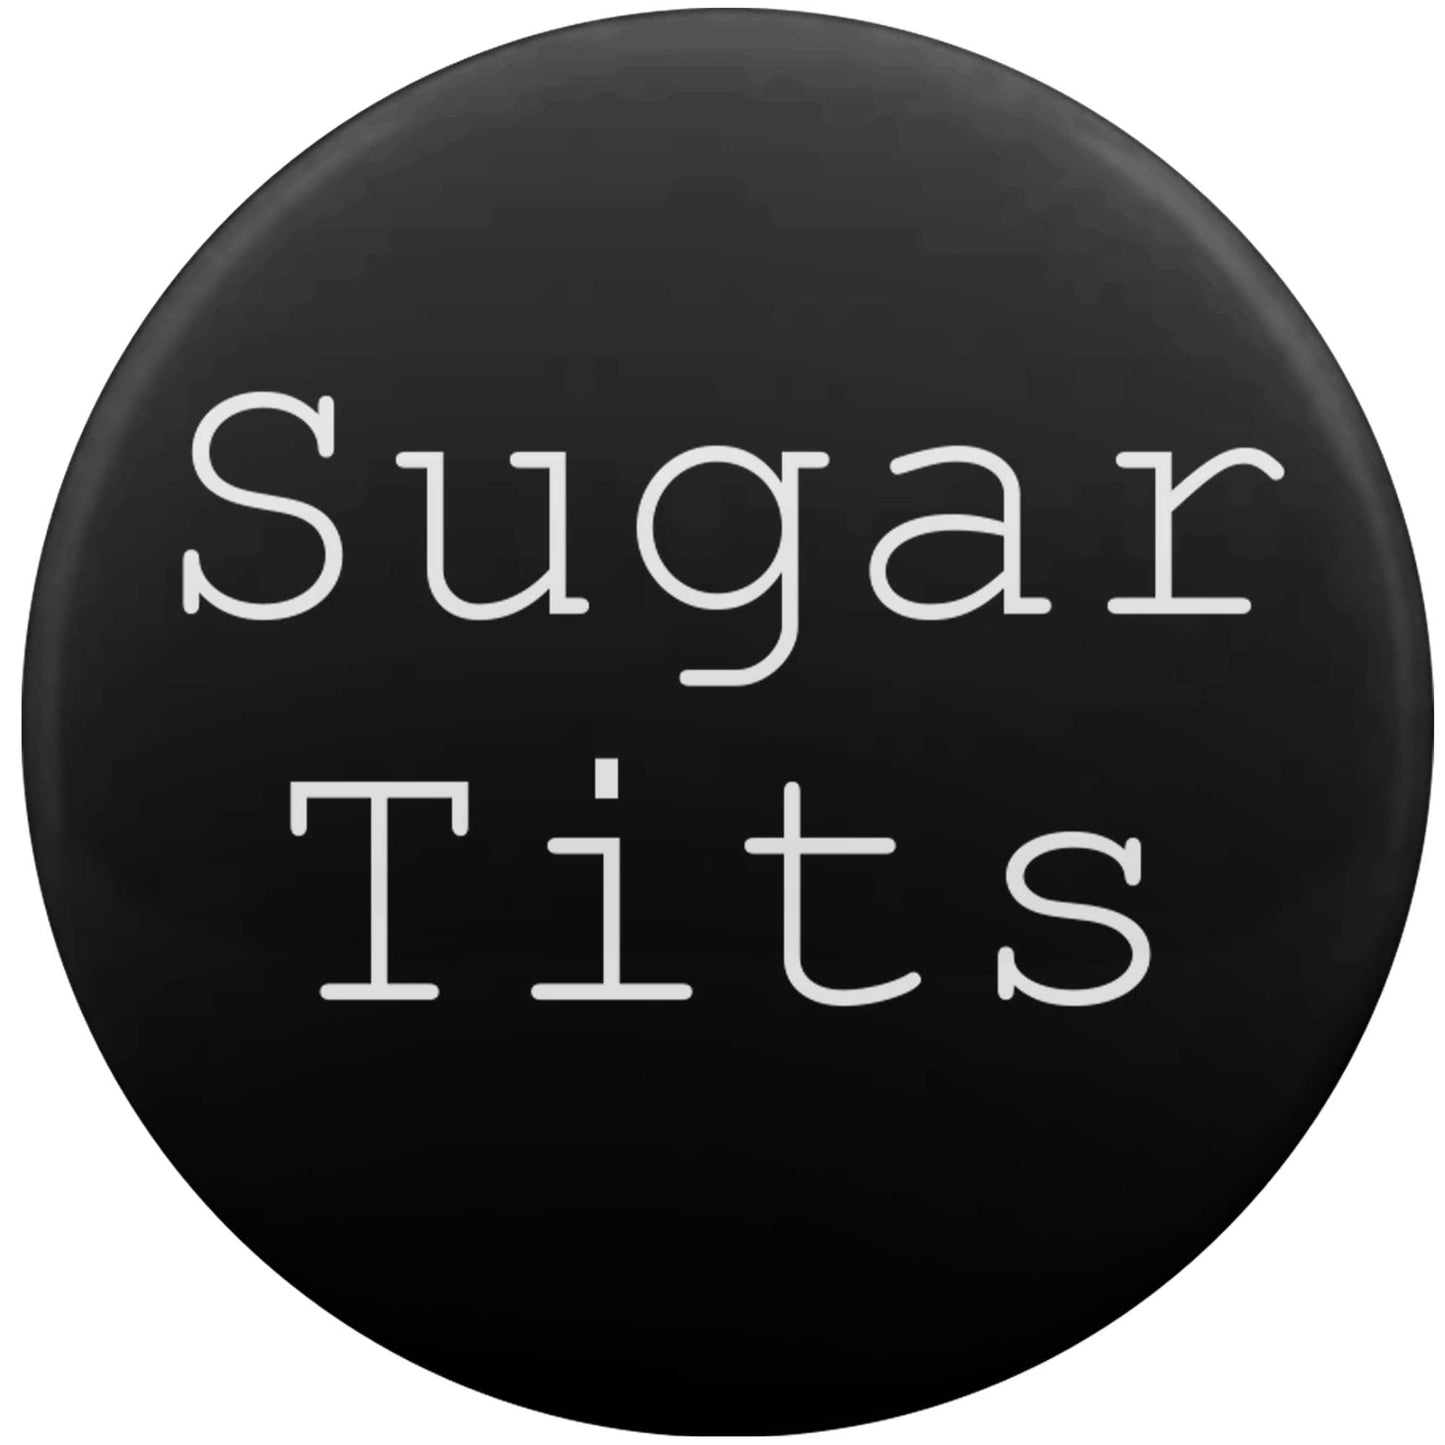 Sugar Tits